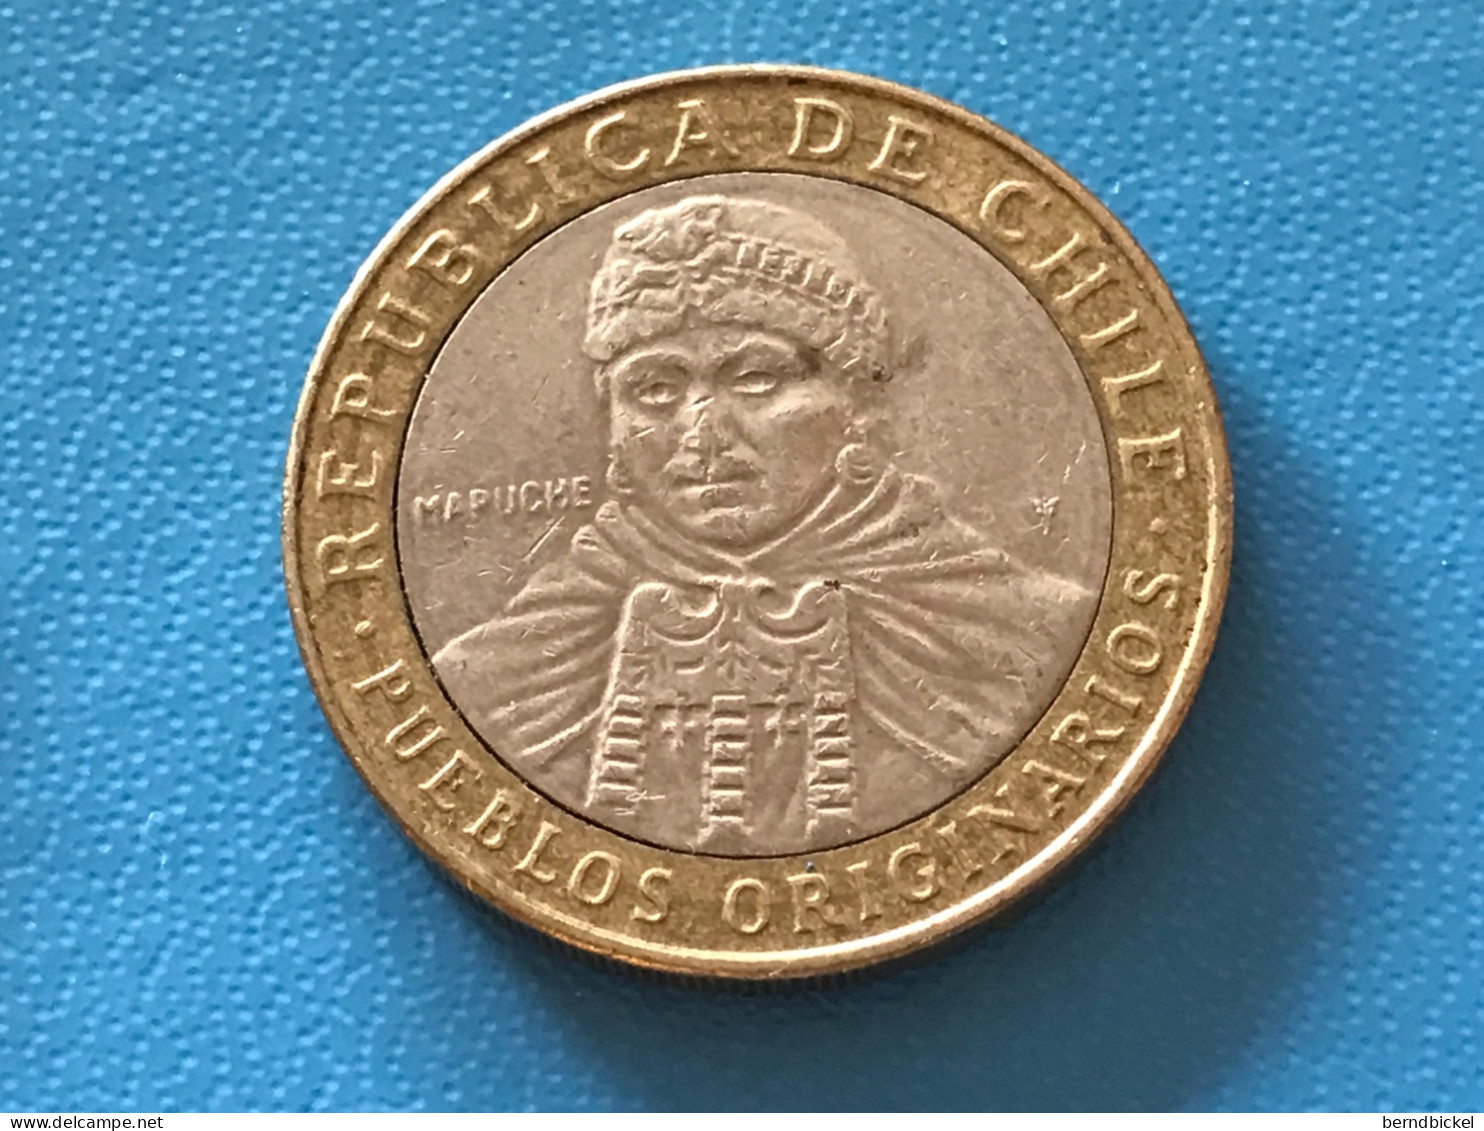 Münze Münzen Umlaufmünze Chile 100 Pesos 2014 - Chili